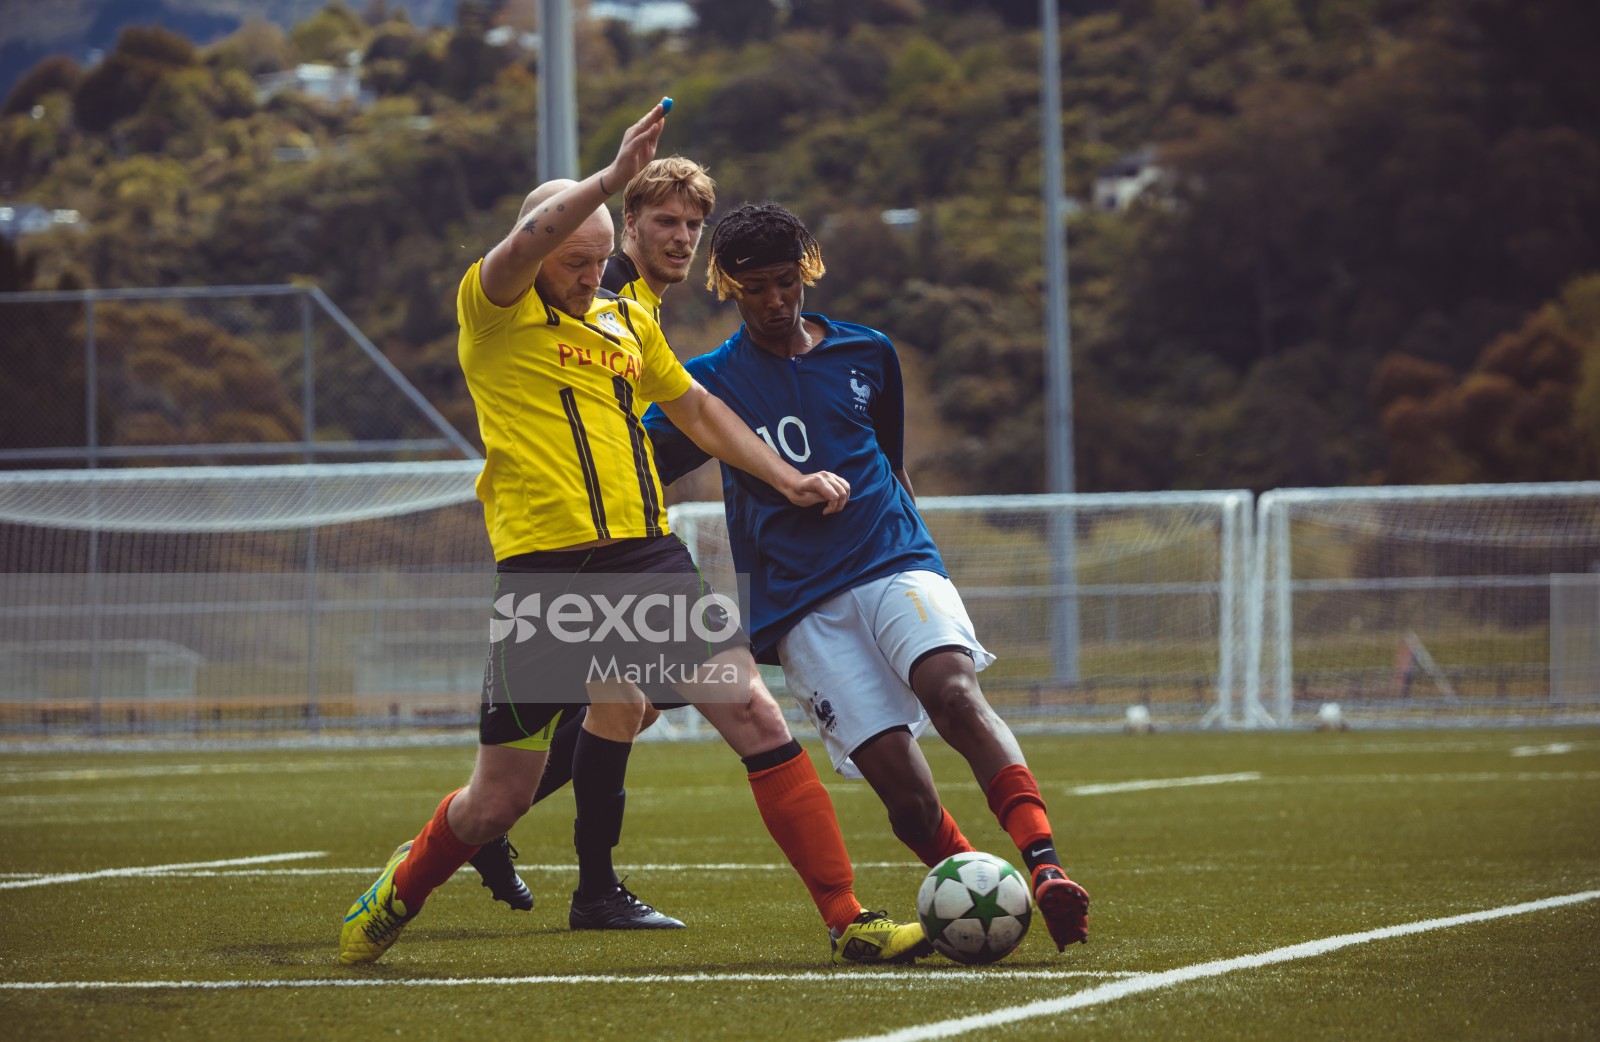 Blue shirt player tackling yellow shirt player - Sports Zone sunday league